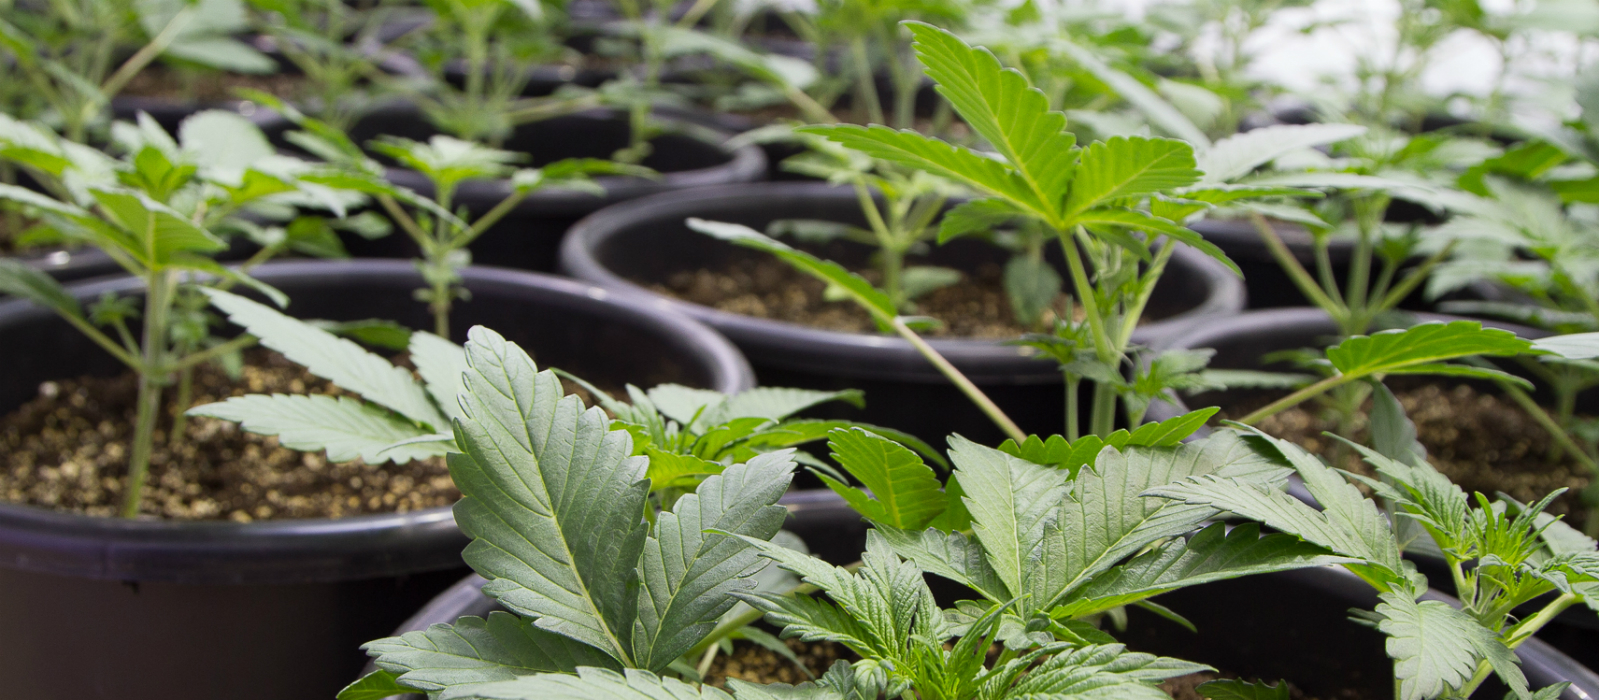 How to grow autoflowering cannabis seeds